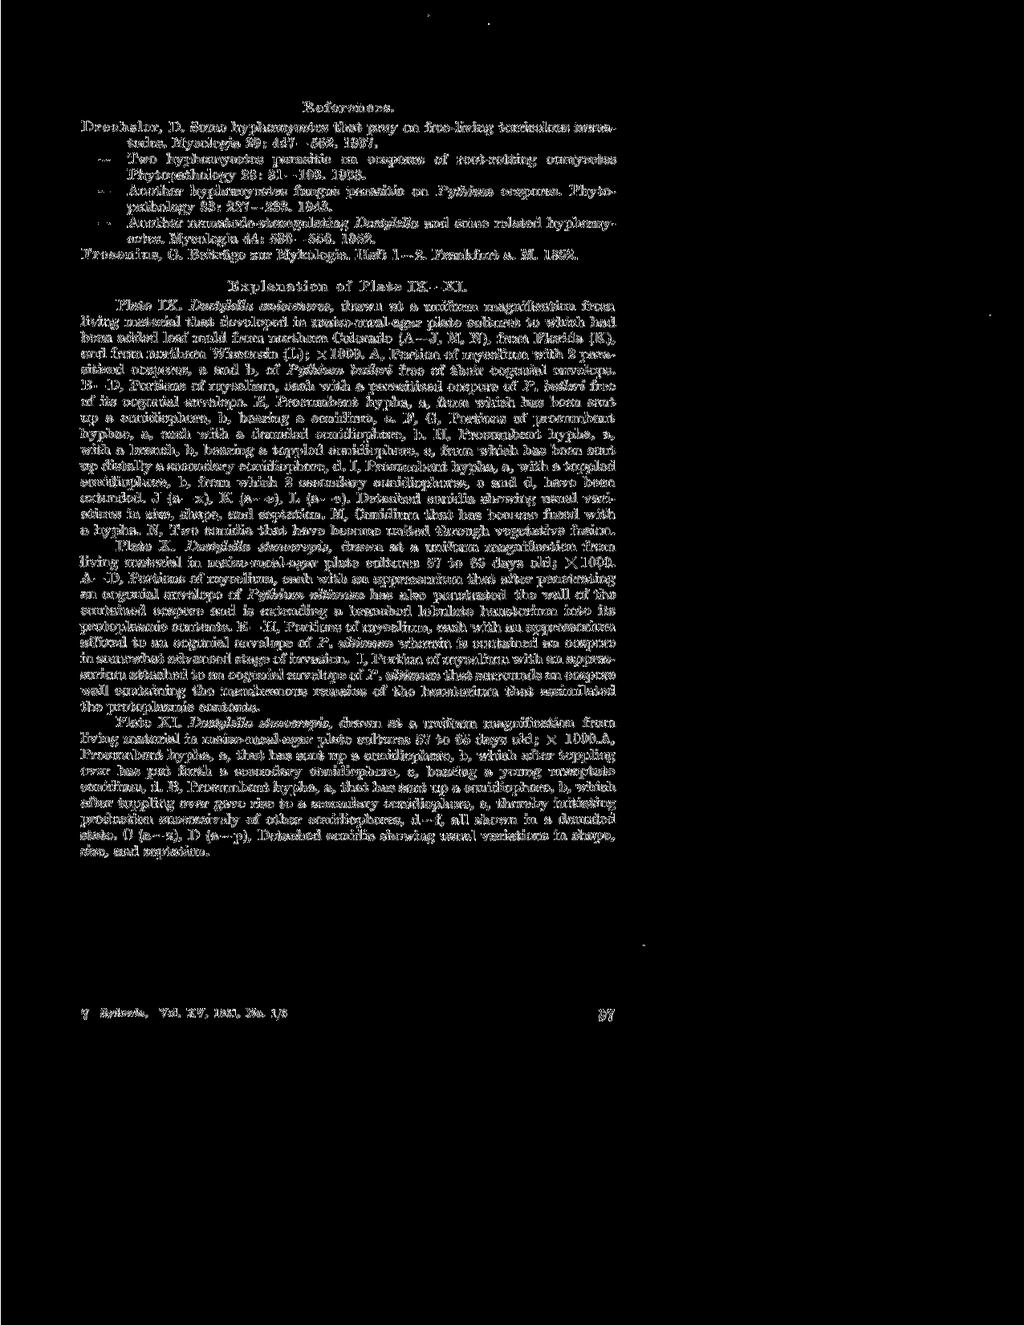 References. Drechsler, D. Some hyphomycetes that prey on free-living terricolous nematodes. Mycologia 29: 447-552. 1937.